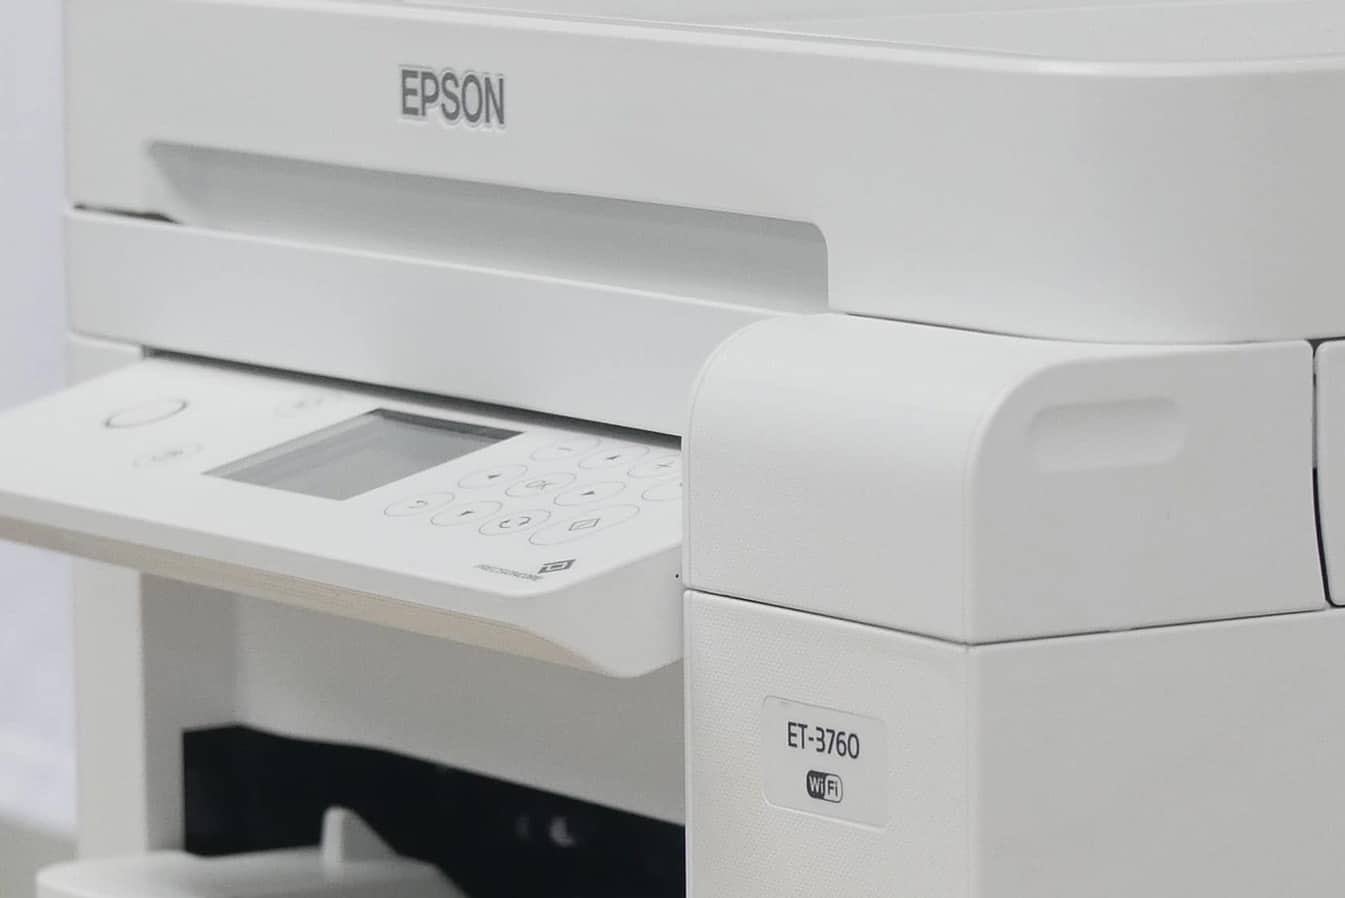 close up of an EPSON printer